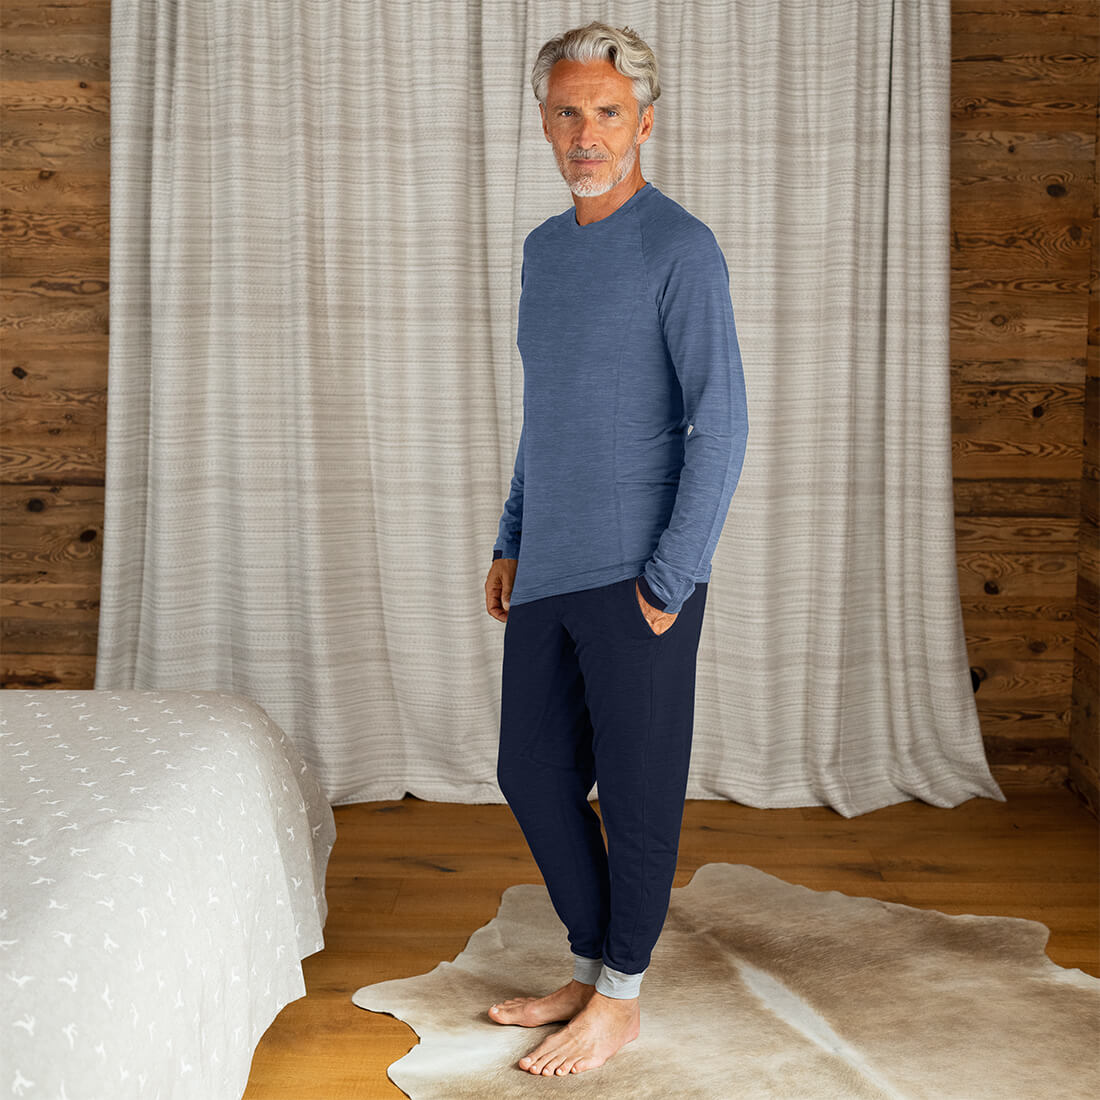 The finest men's merino wool pajamas